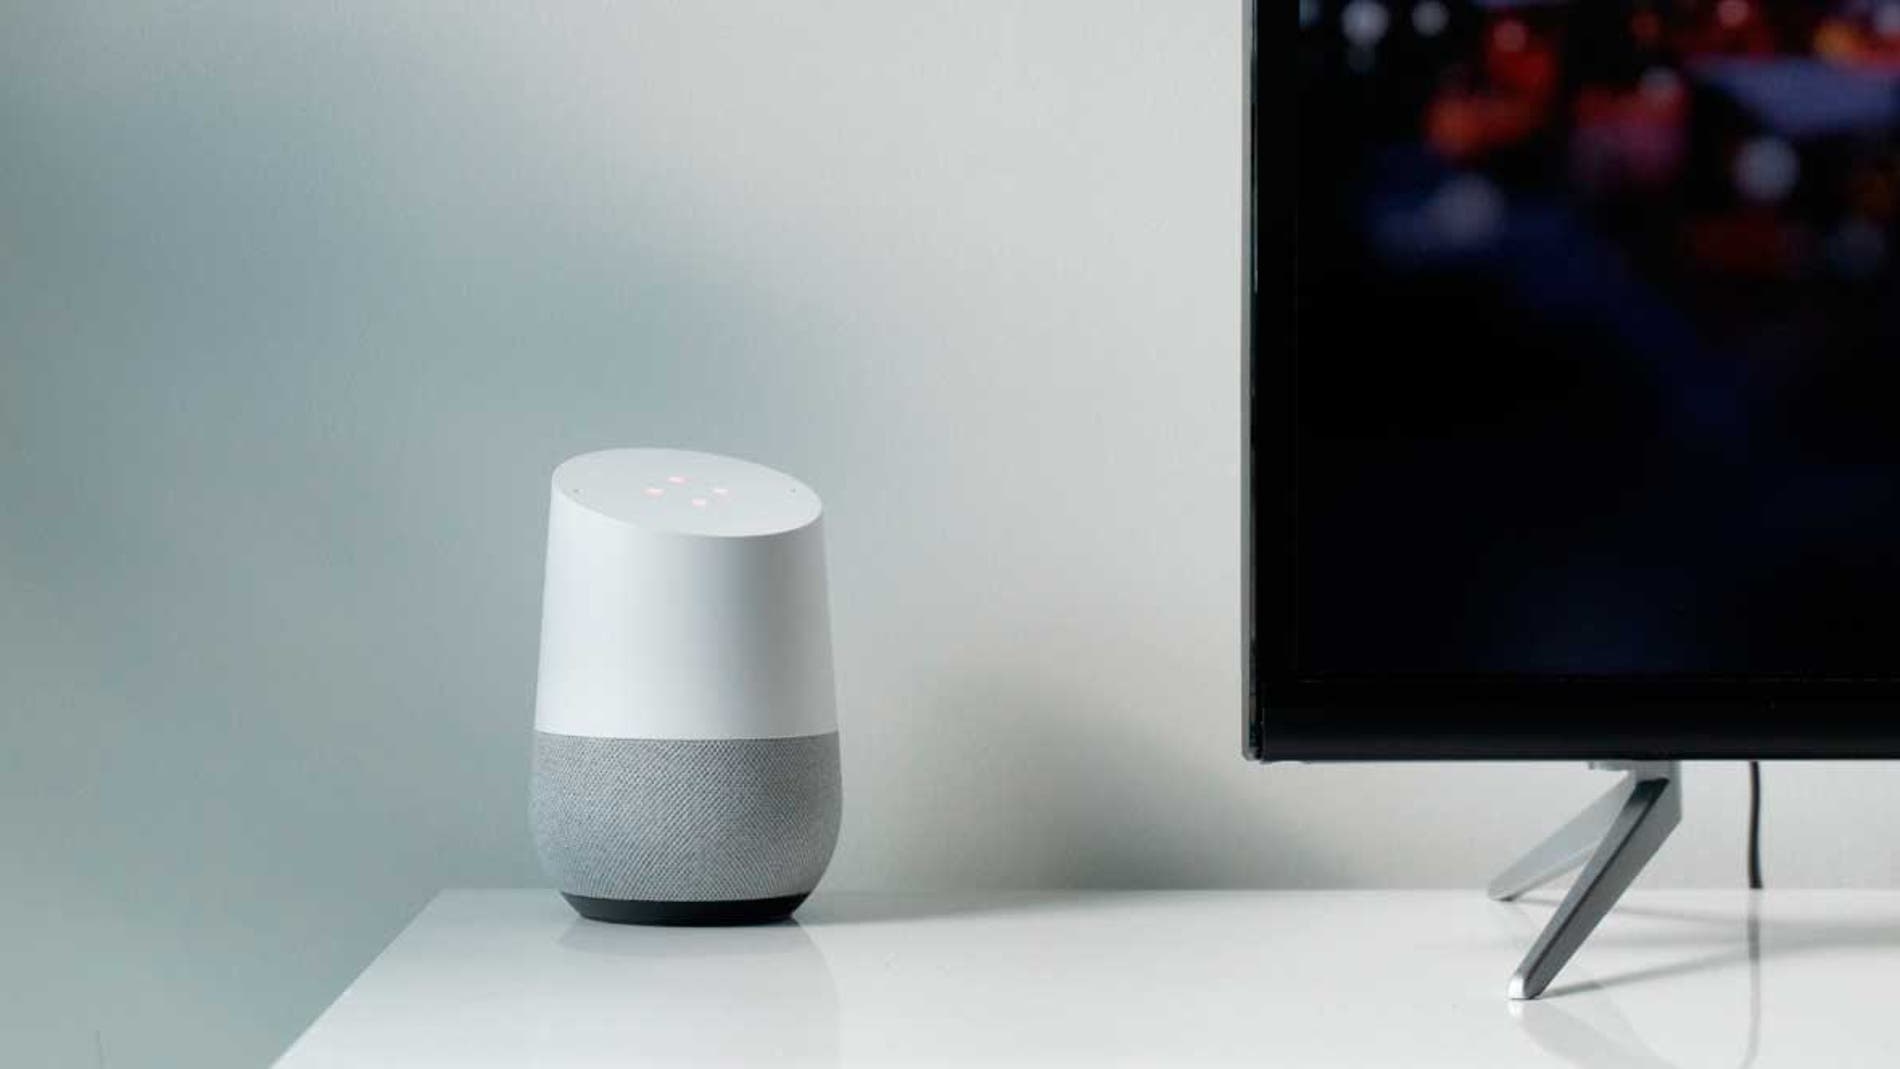 Cómo usar Google Home como un altavoz Bluetooth